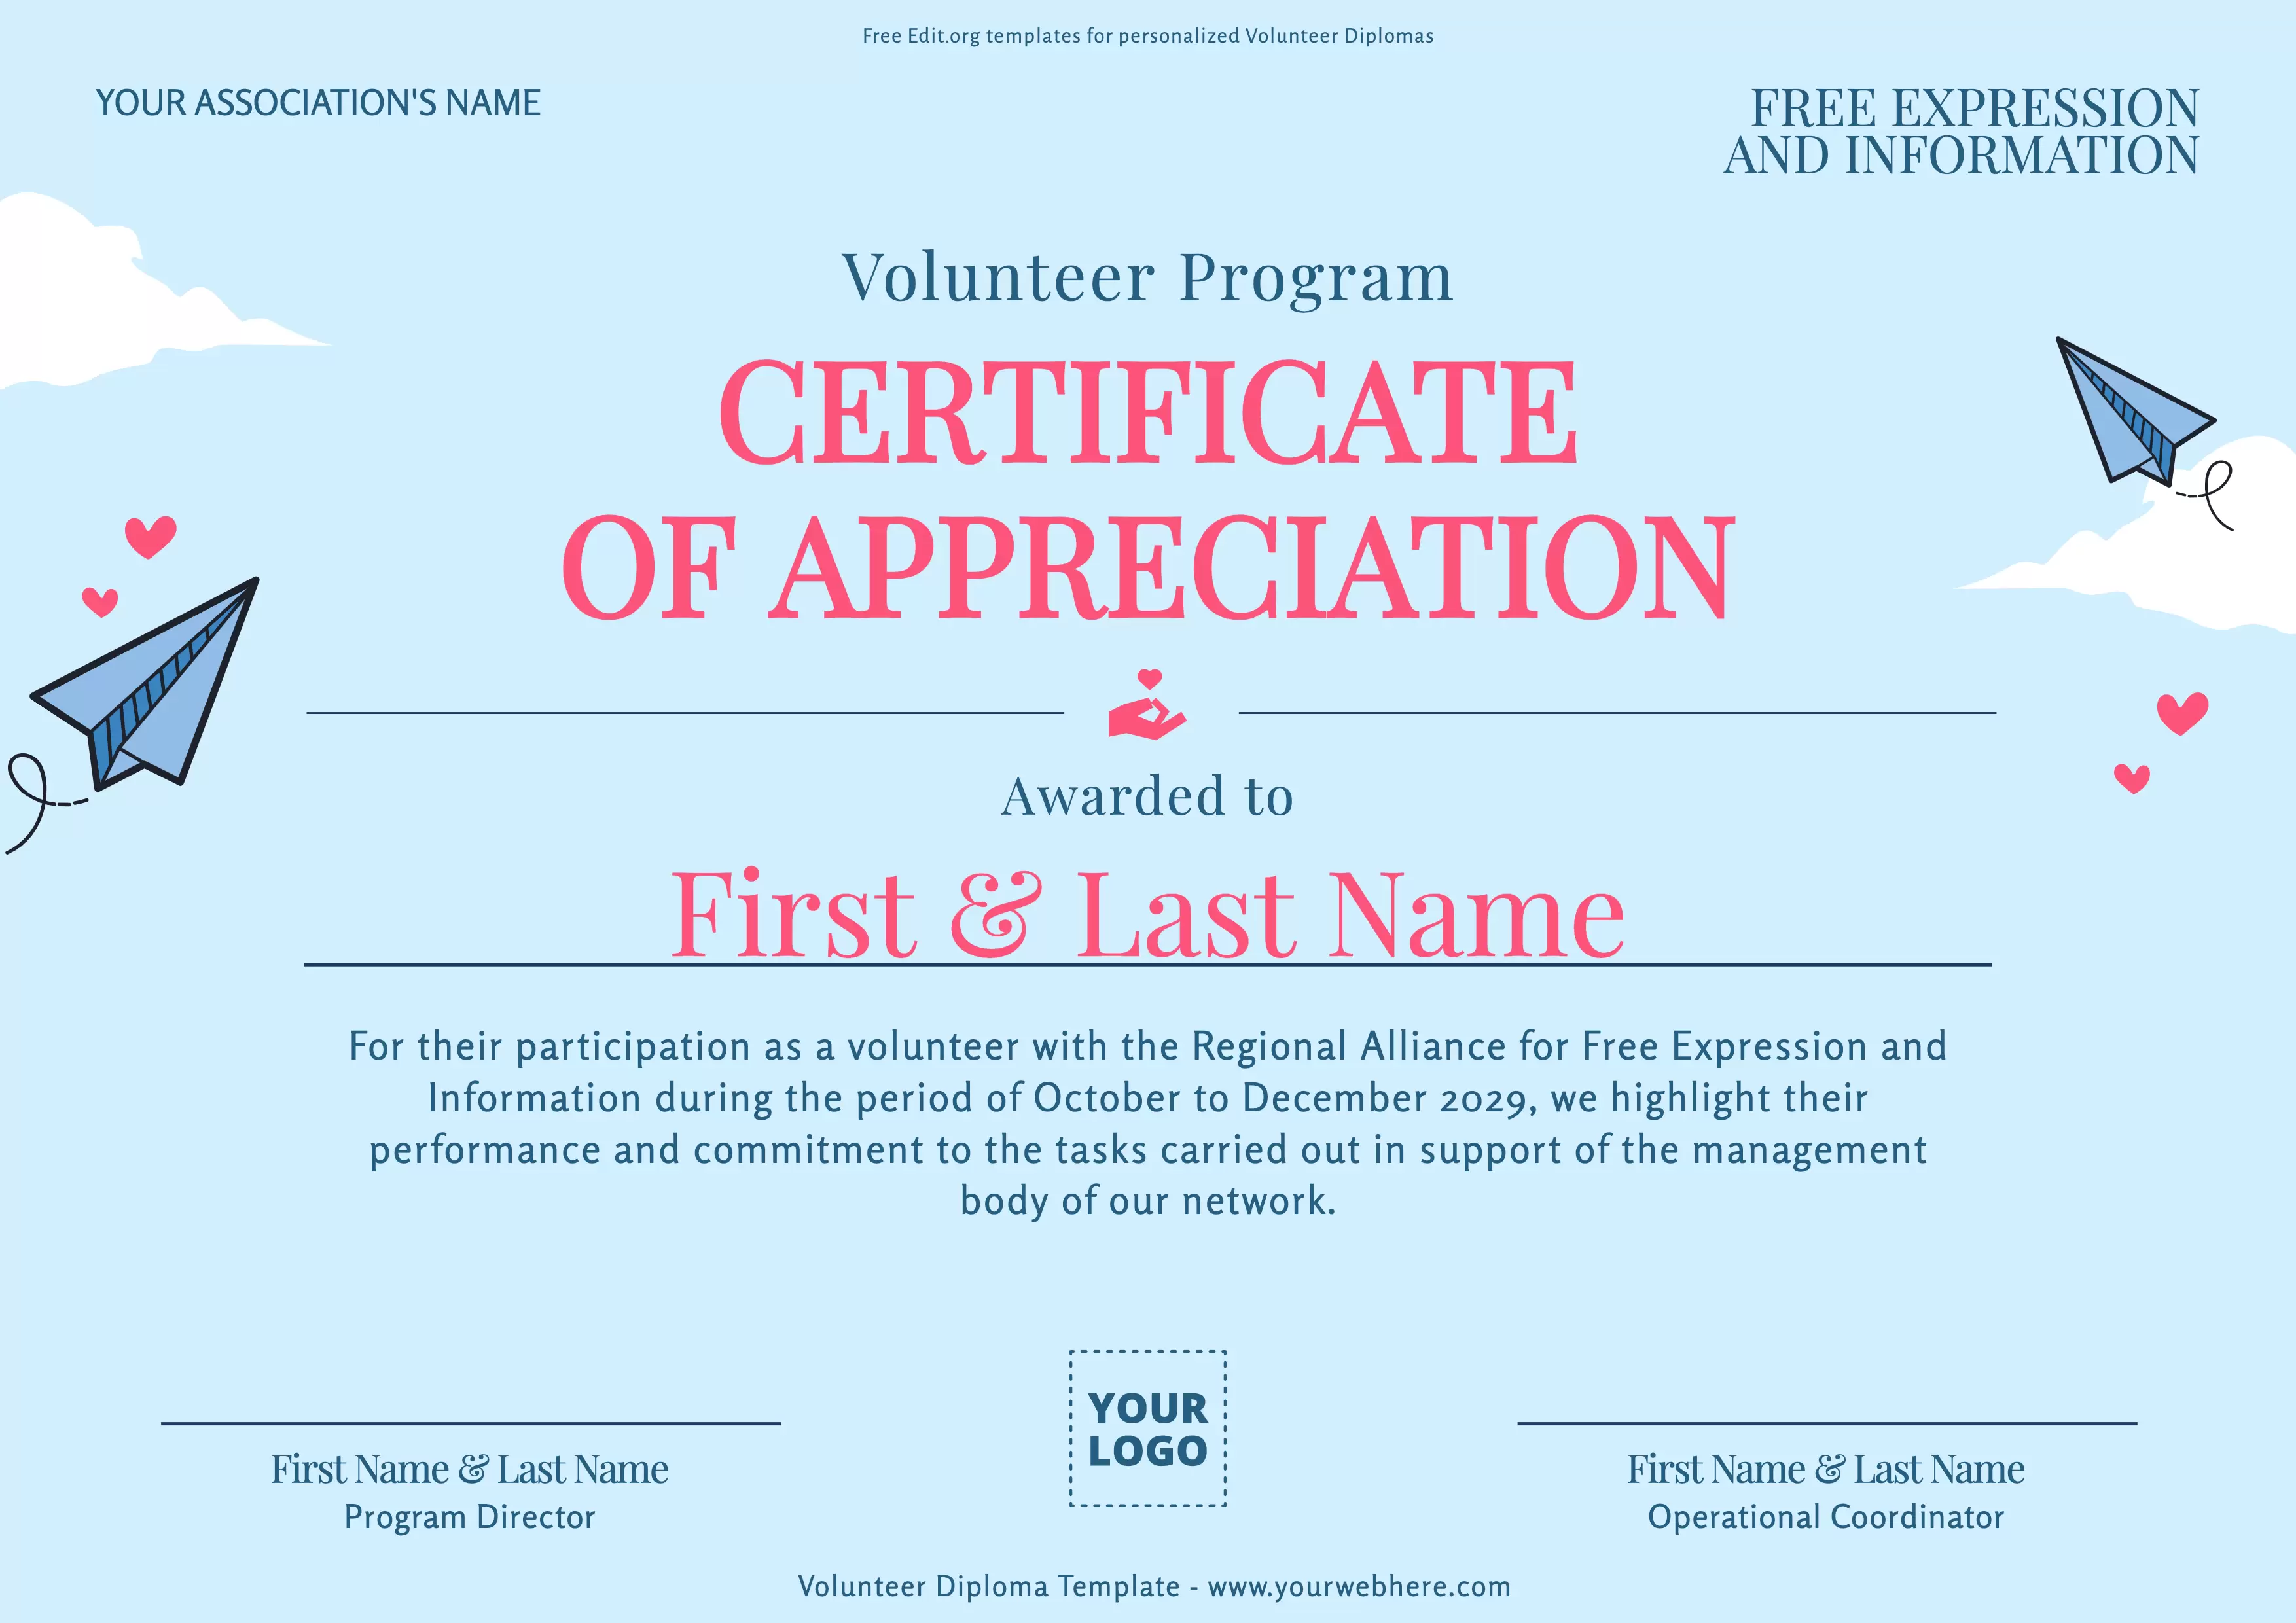 Free Sample Certificate of Appreciation for Volunteer Service template